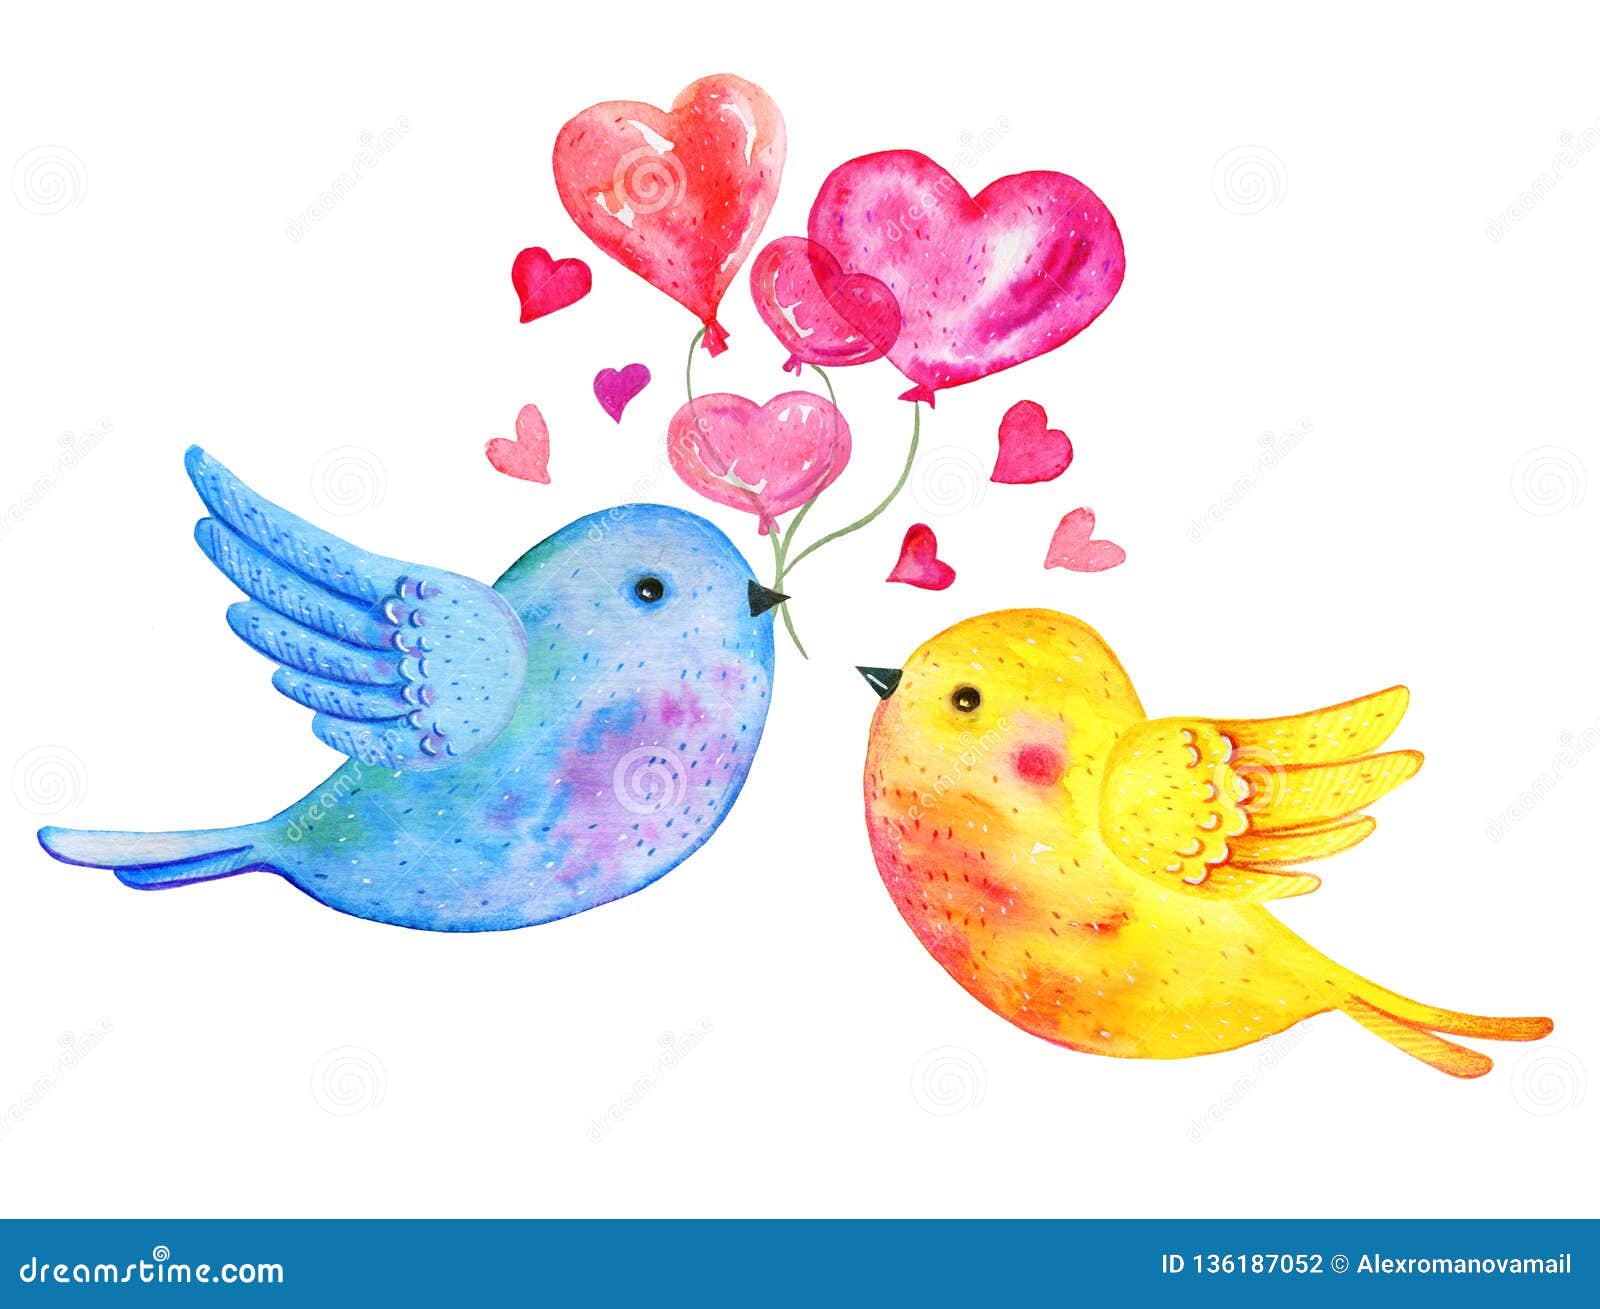 Love birds | Love bird tattoo couples, Love tattoos, Bird drawings